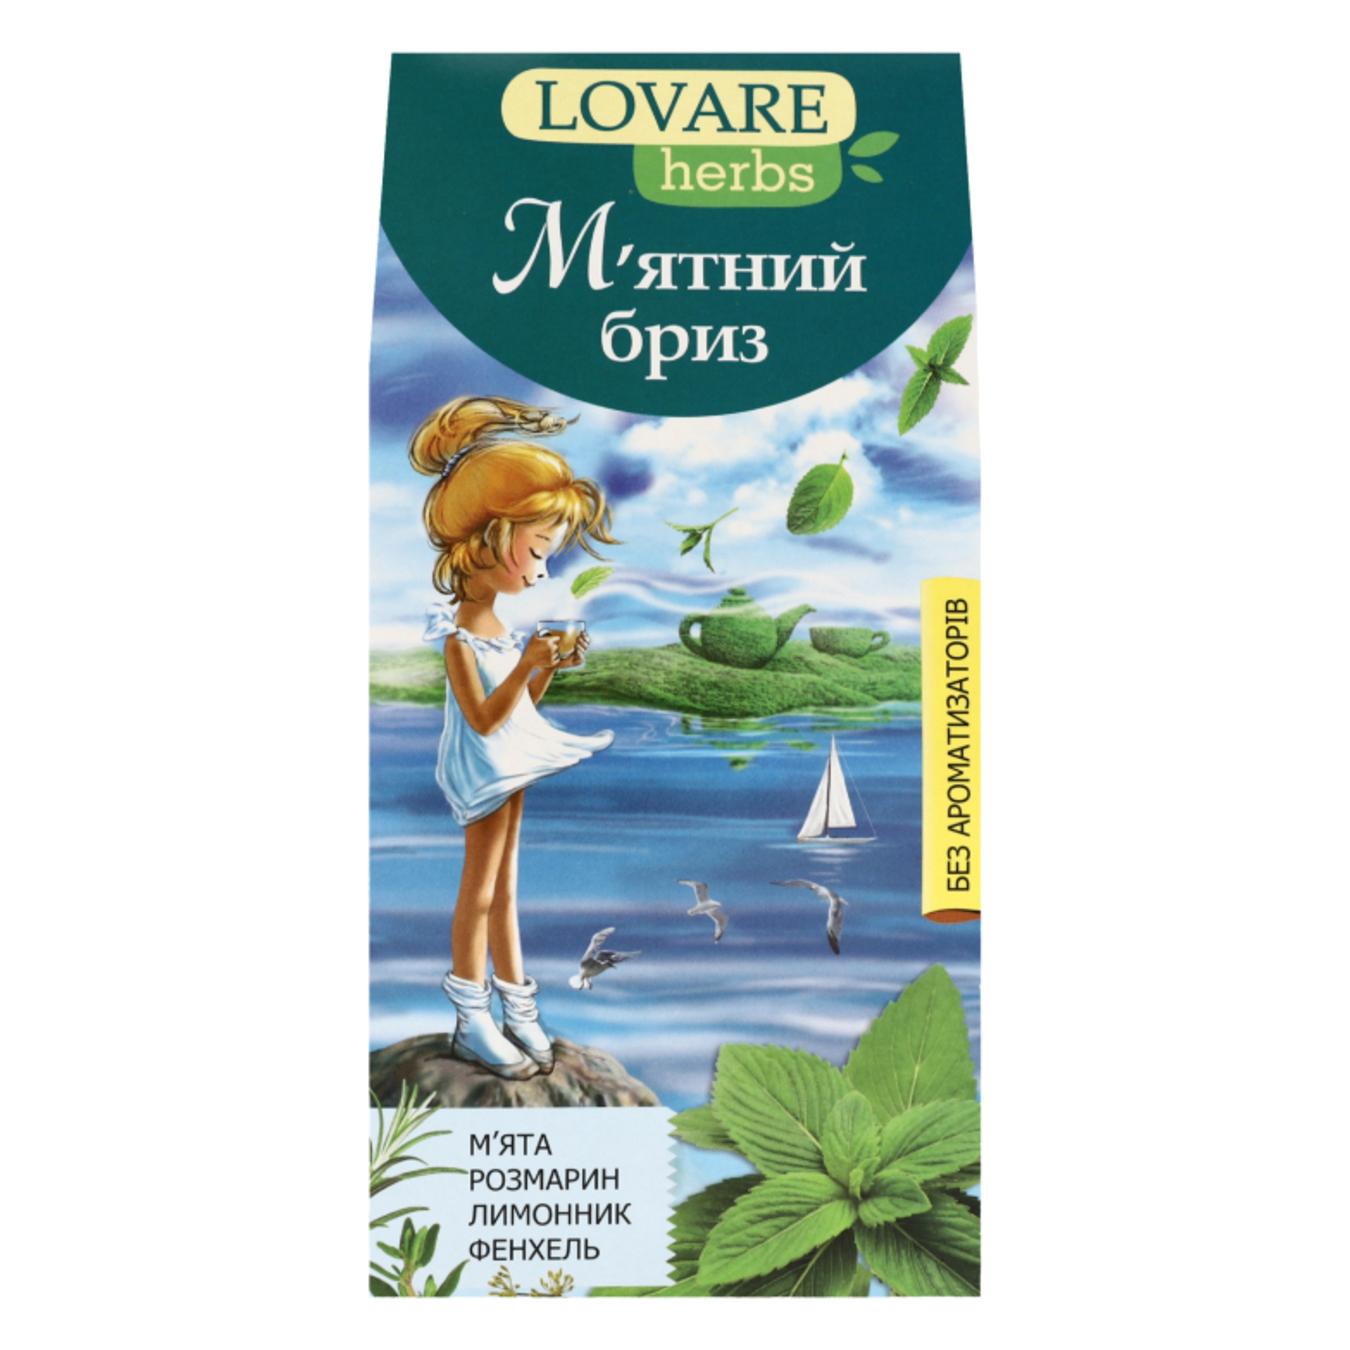 Herbal tea Lovare Mint breeze 20 pyramids of 1.8 g each